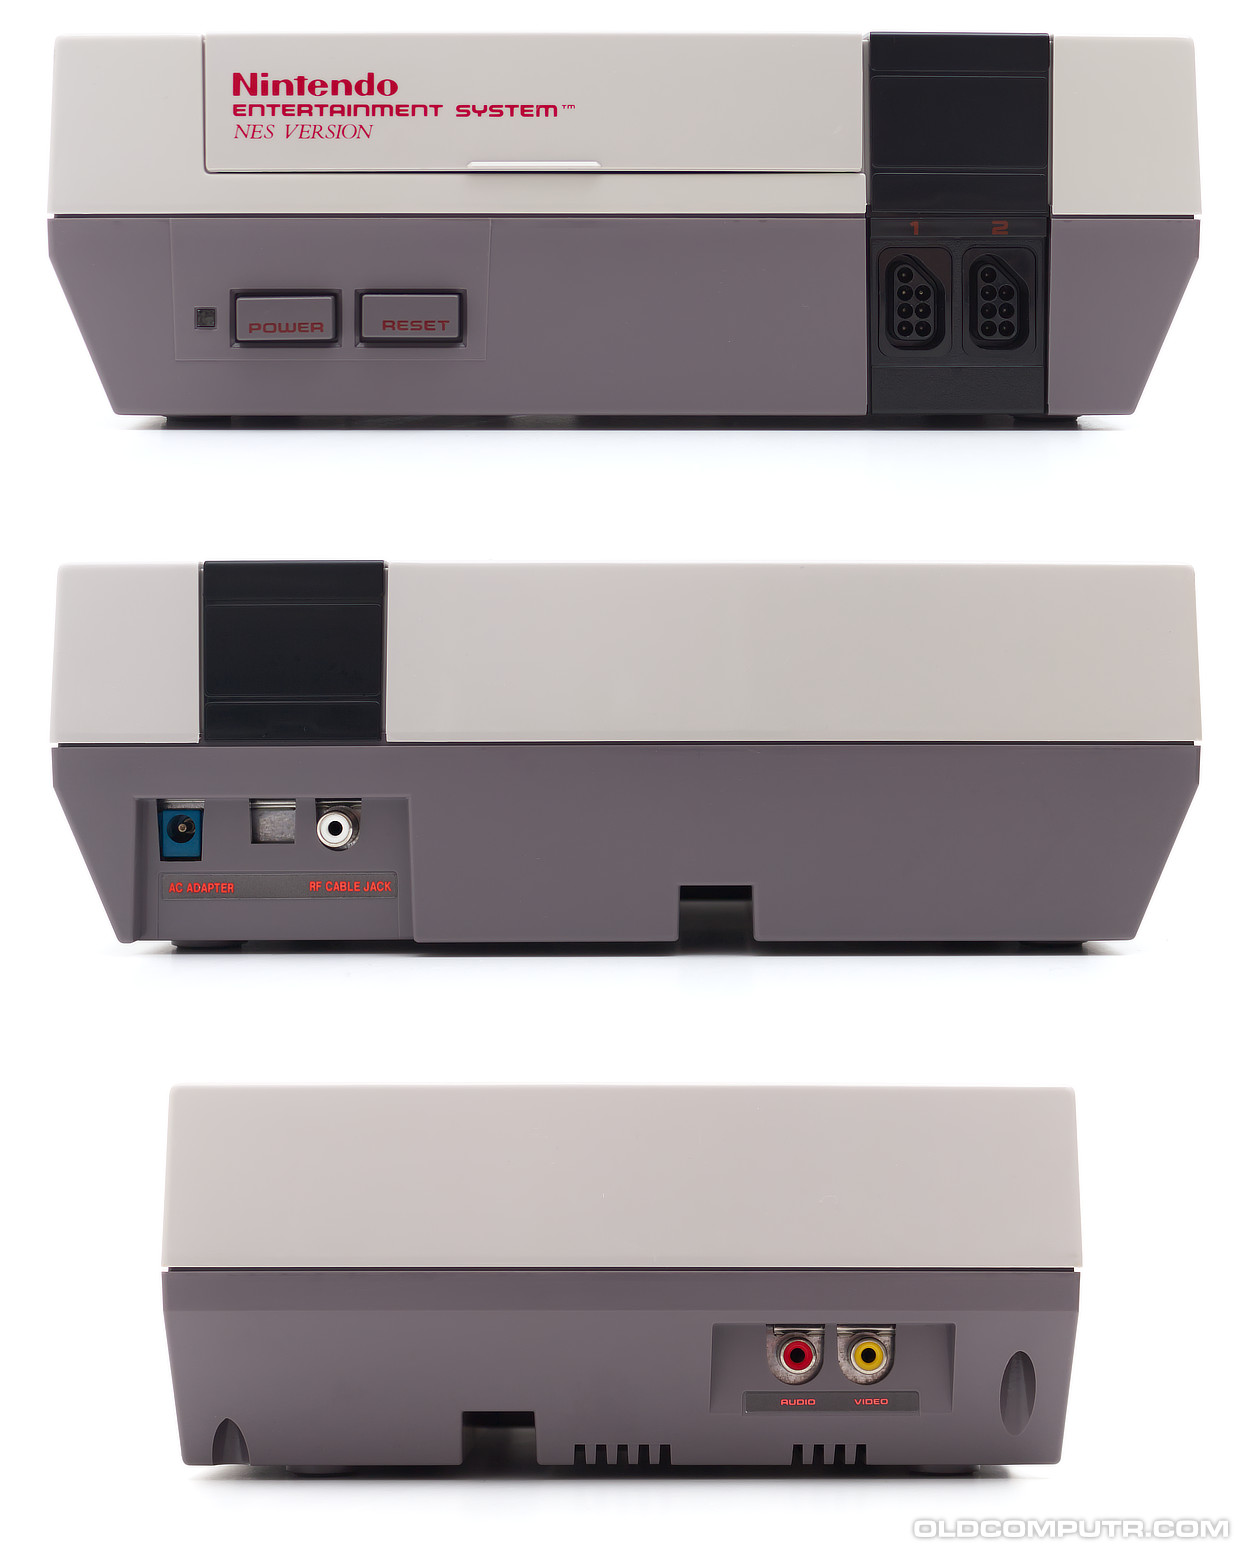 Nintendo Entertainment System / NES - sides